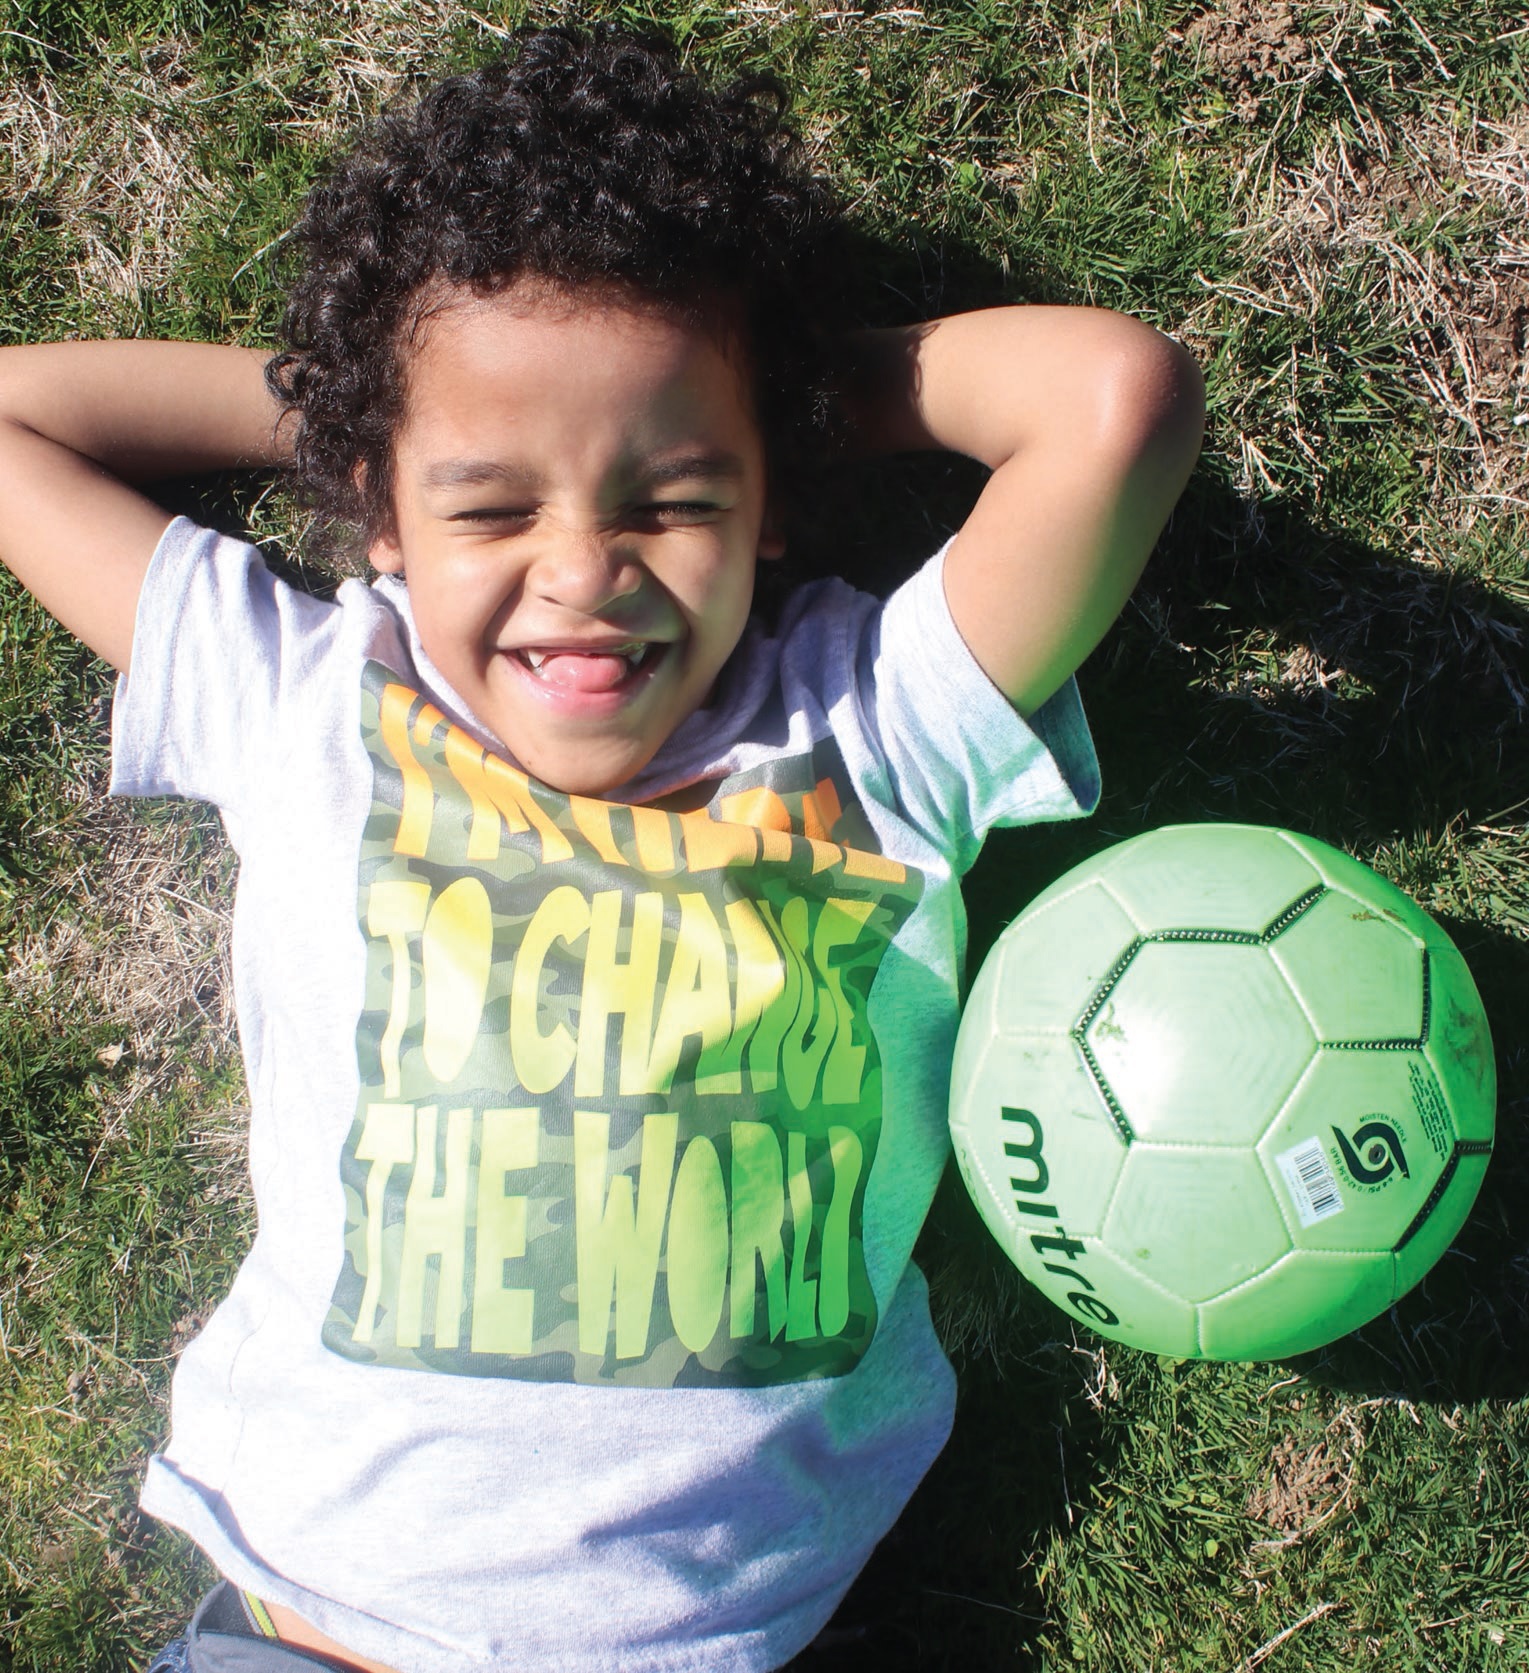 DC SCORES uses soccer to build life skills for kids. PHOTO BY JAKAYLA TONEY/UNSPLASH